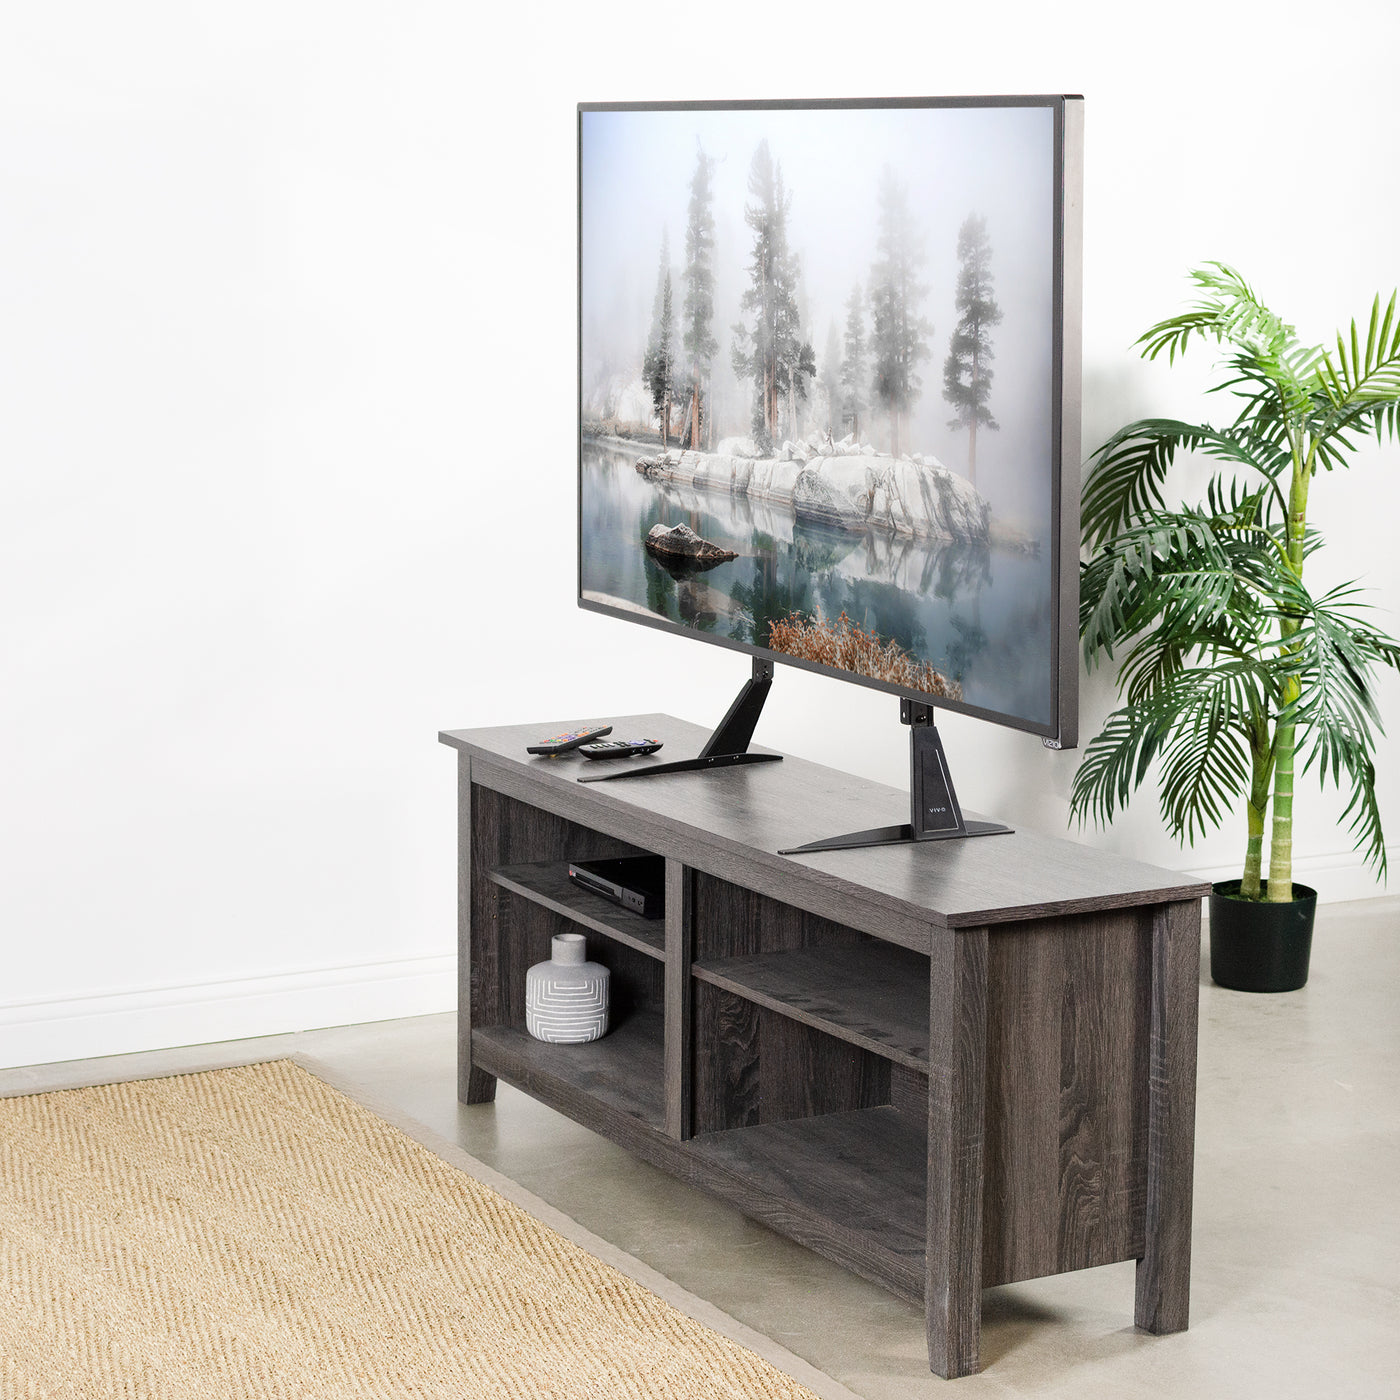  Minimalist and sleek looks of dual-leg TV stands.